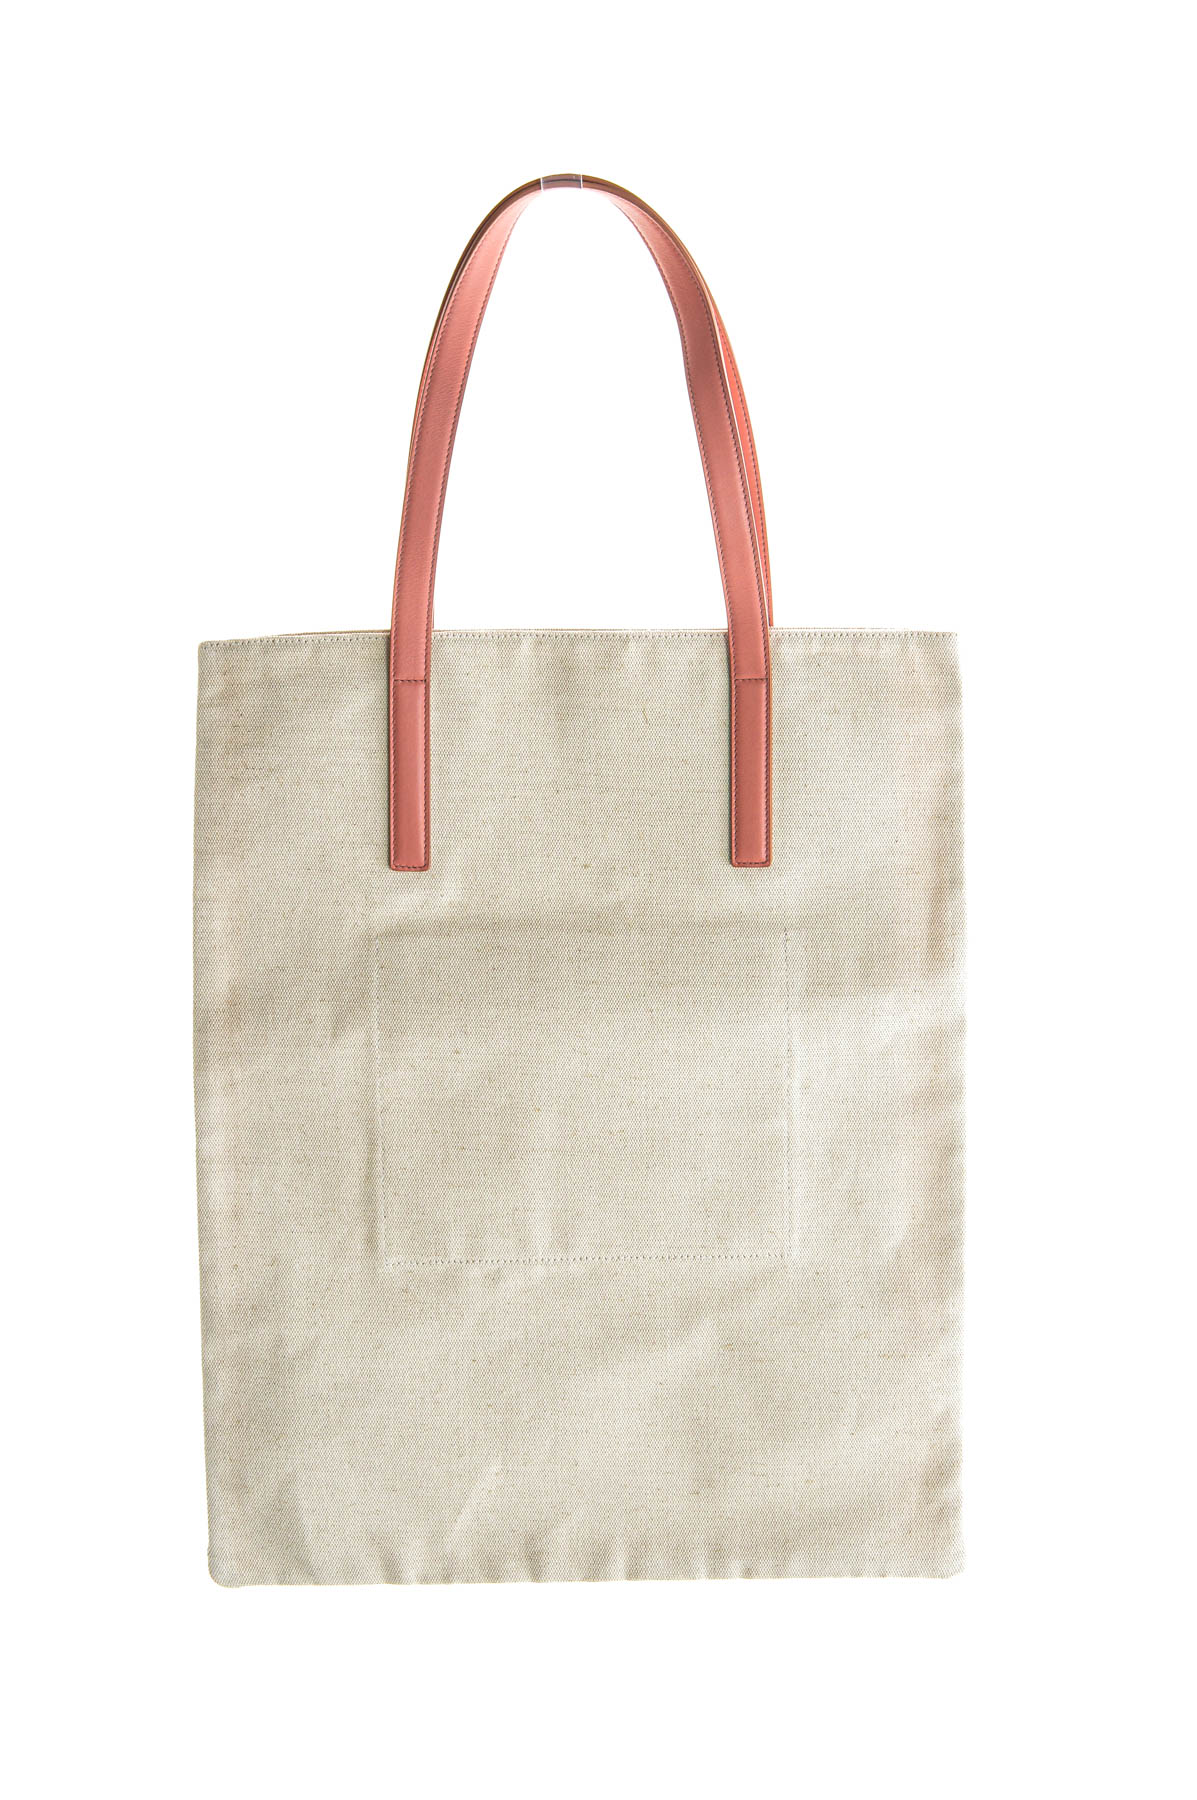 Shopping bag - Carlotha Ray - 1